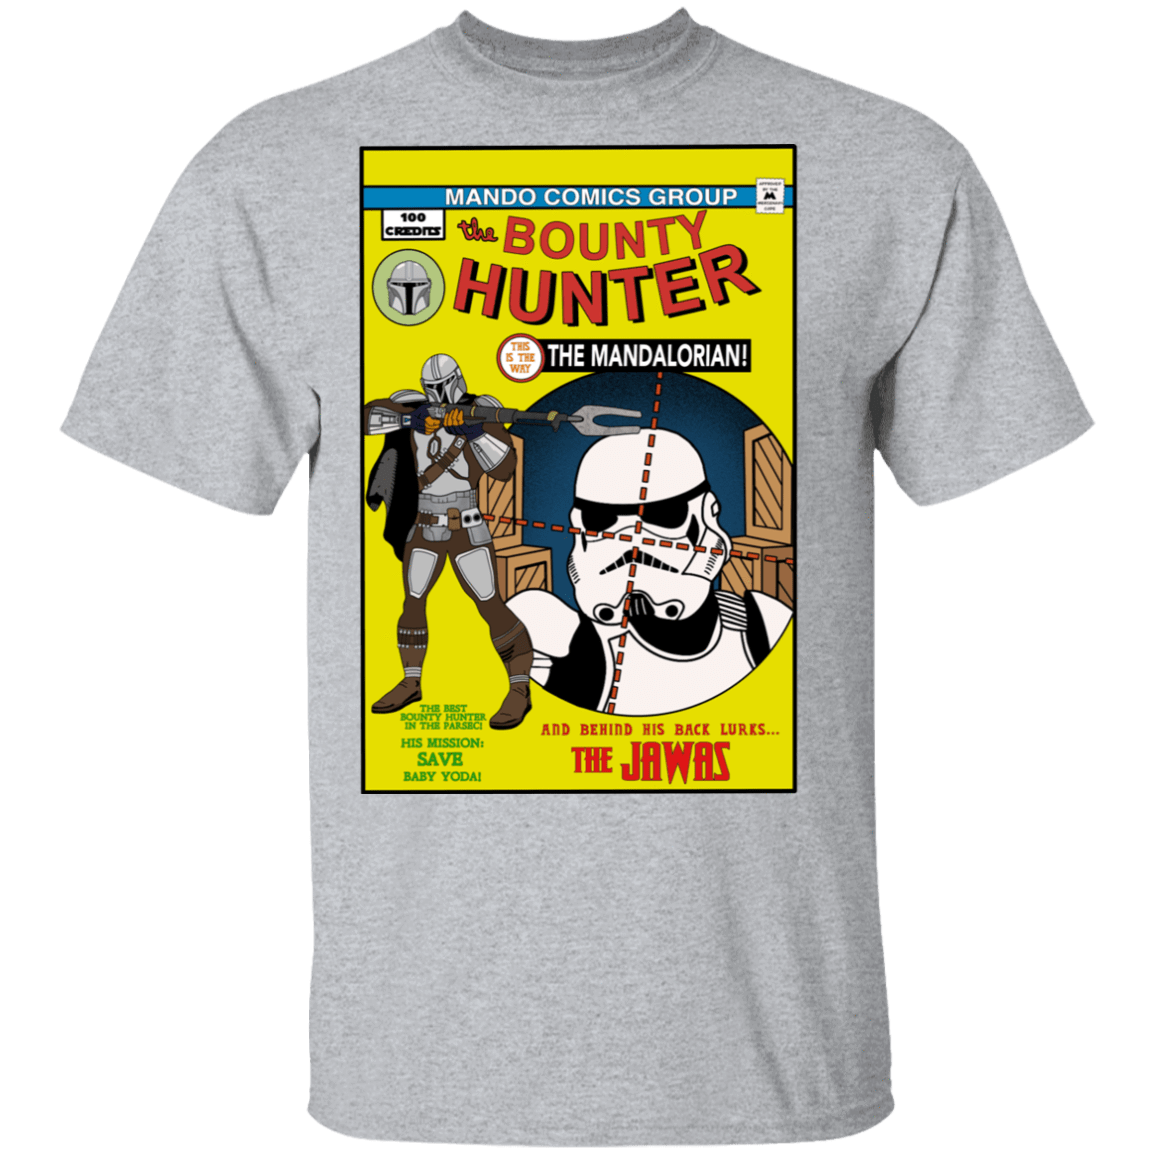 T-Shirts Sport Grey / S The Bounty Hunter Comic T-Shirt